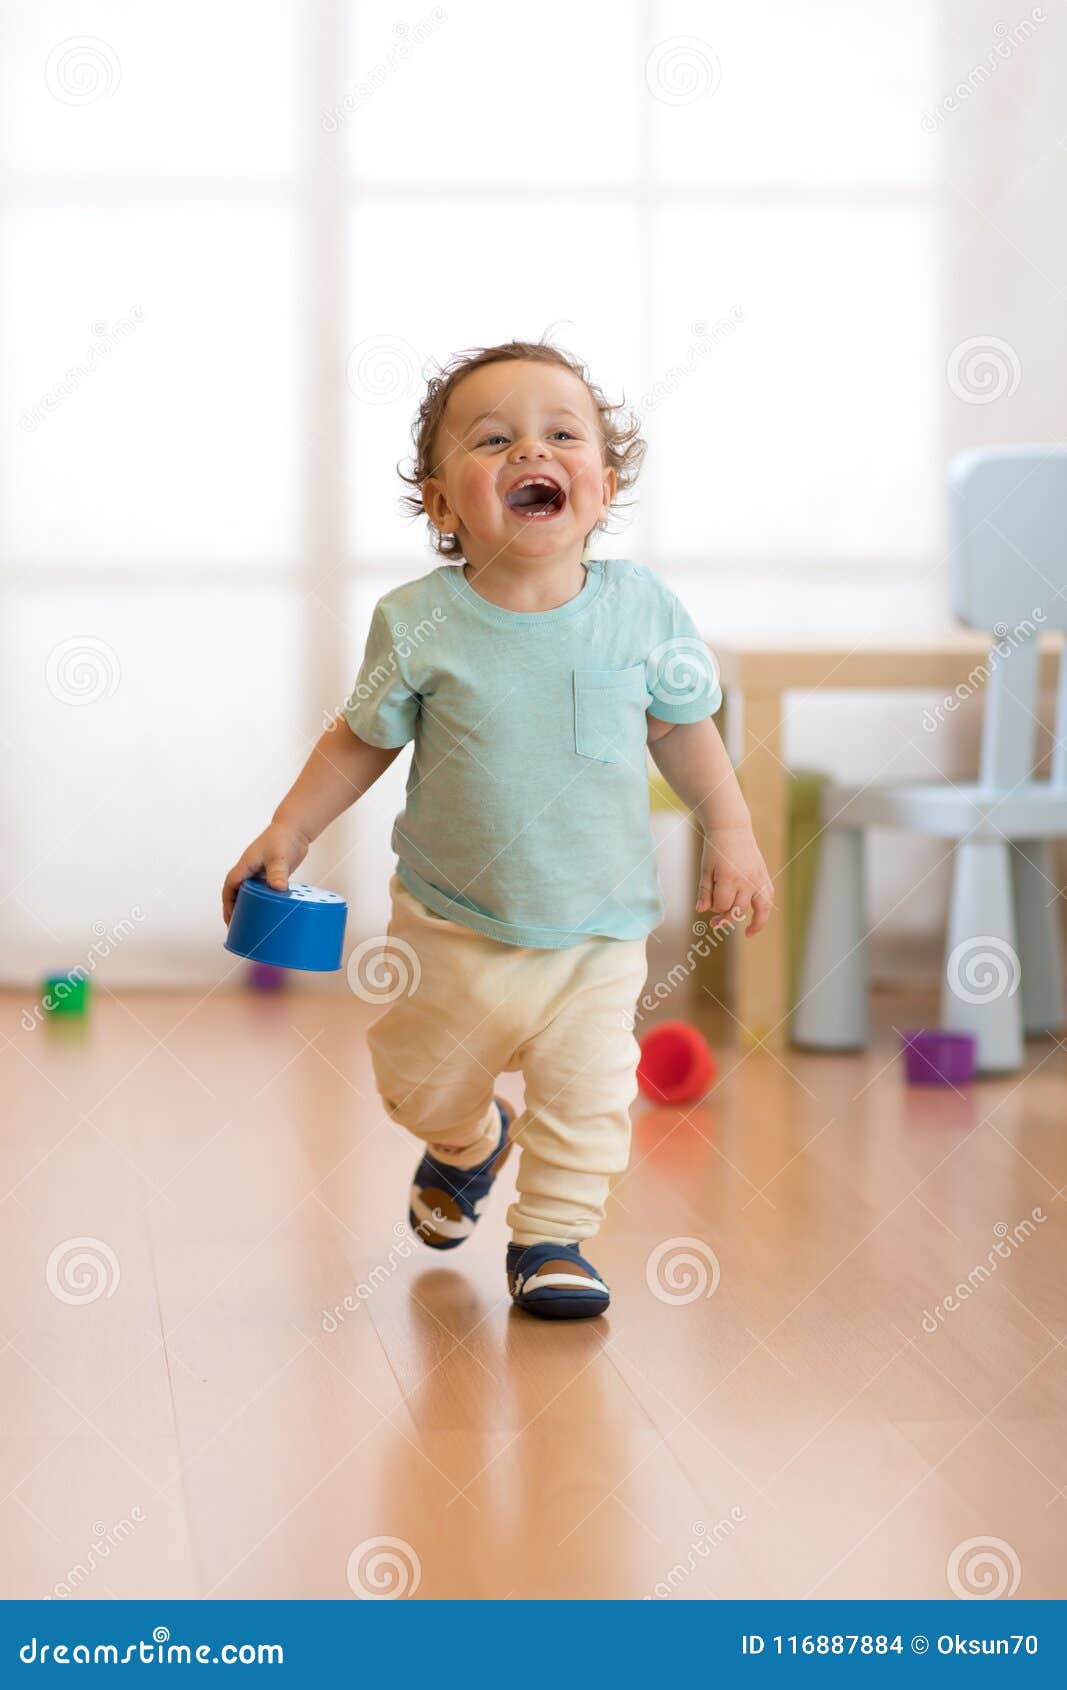 baby toddler running indoors